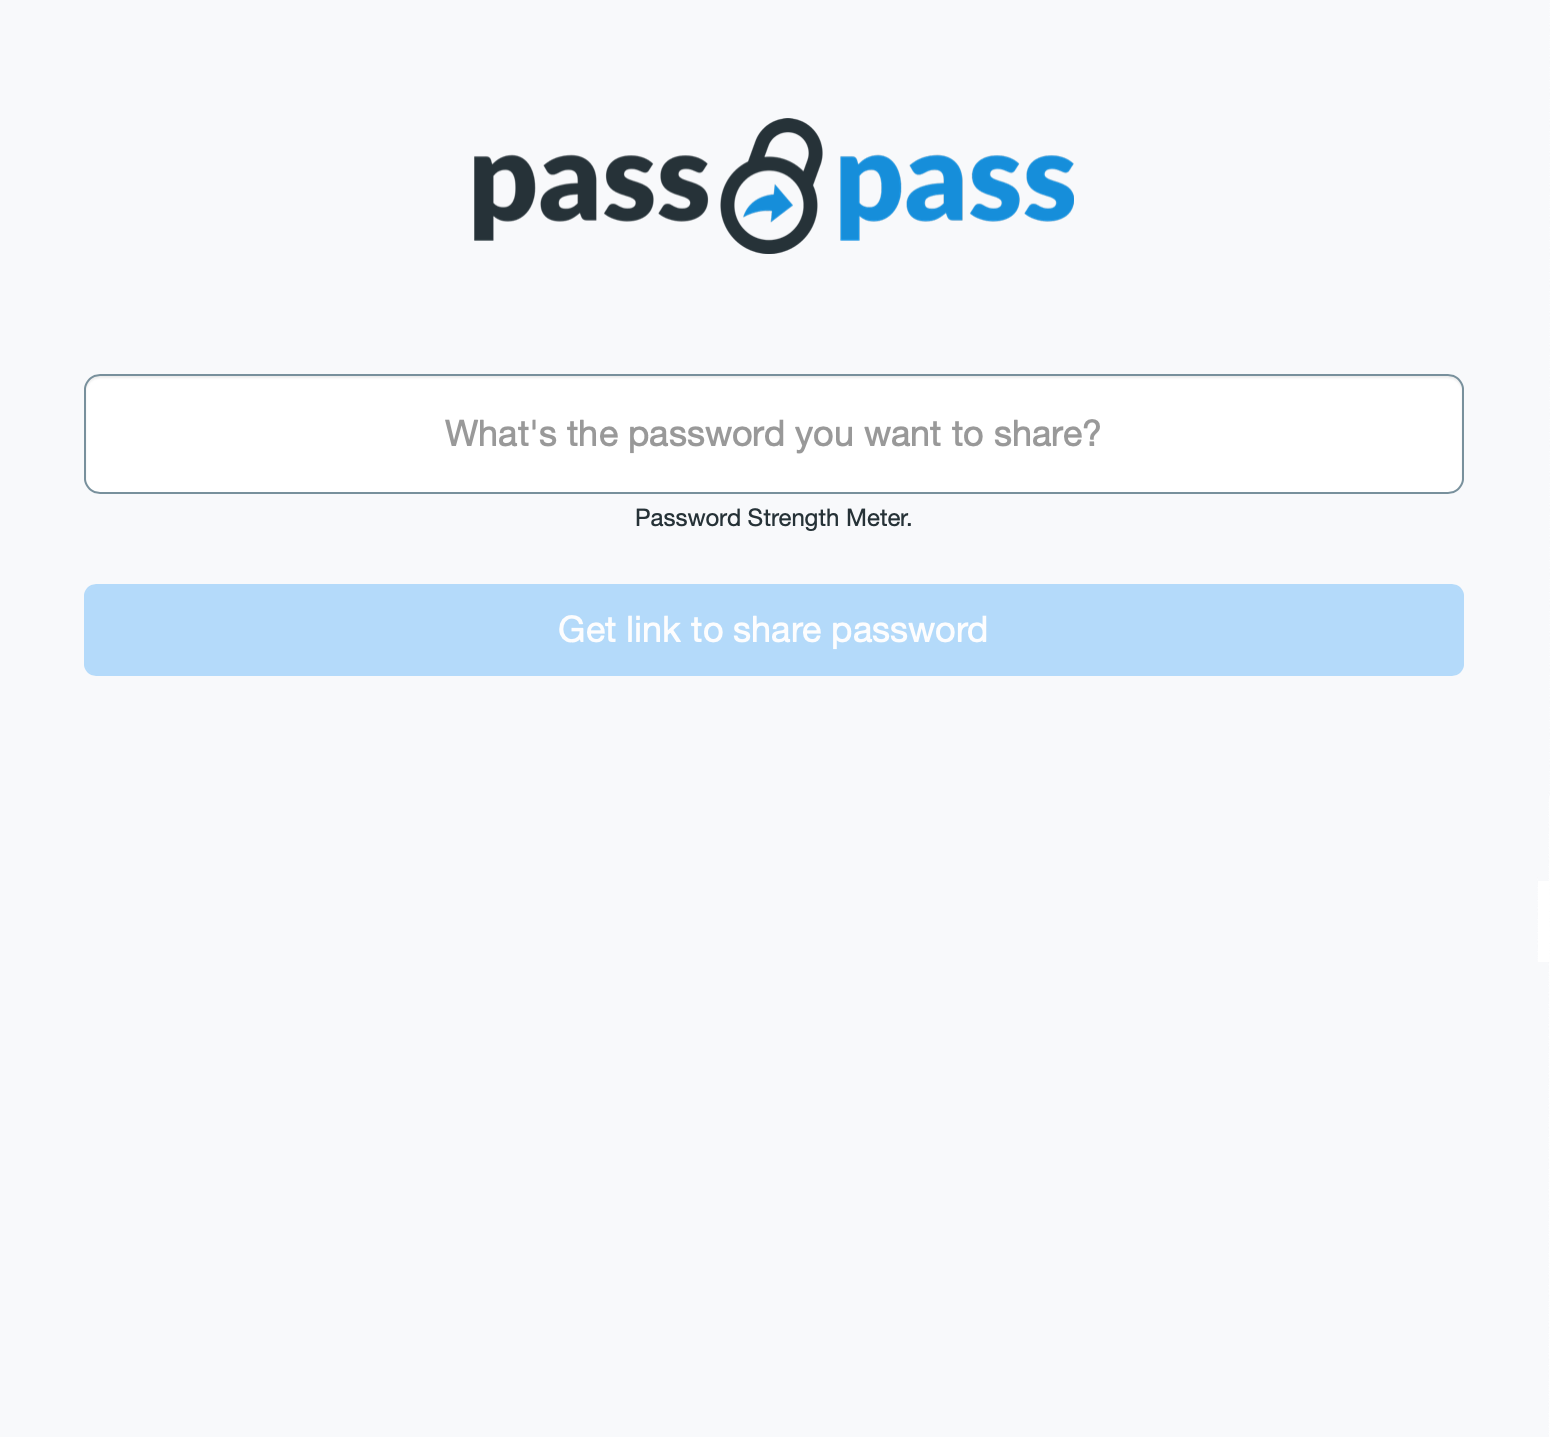 passpass.co